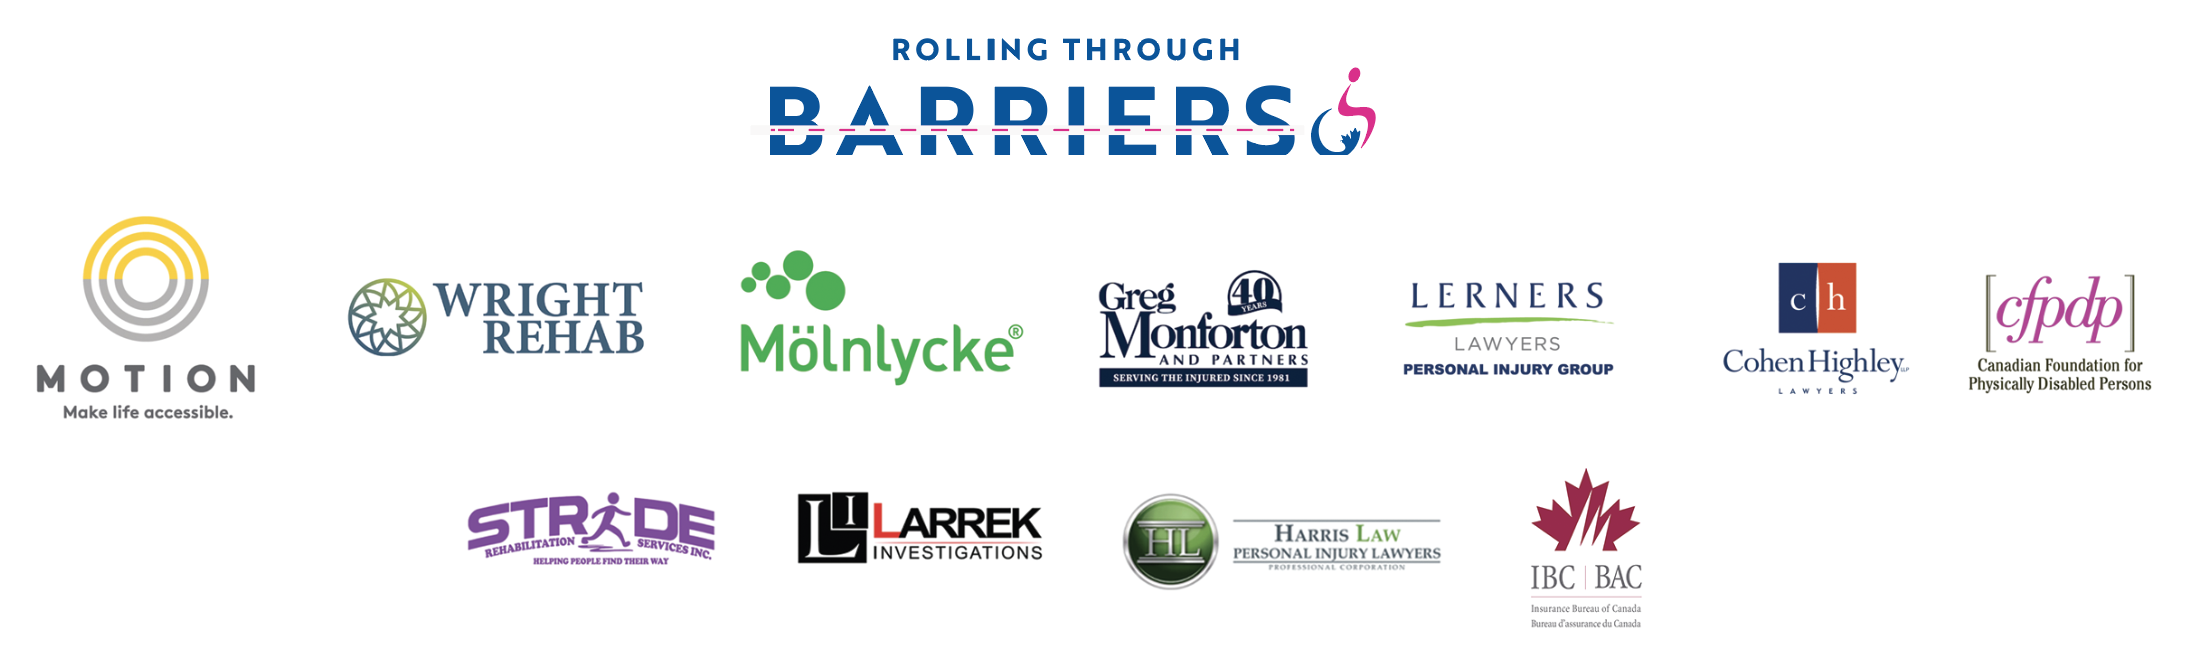 Rolling Through Barriers sponsor logos